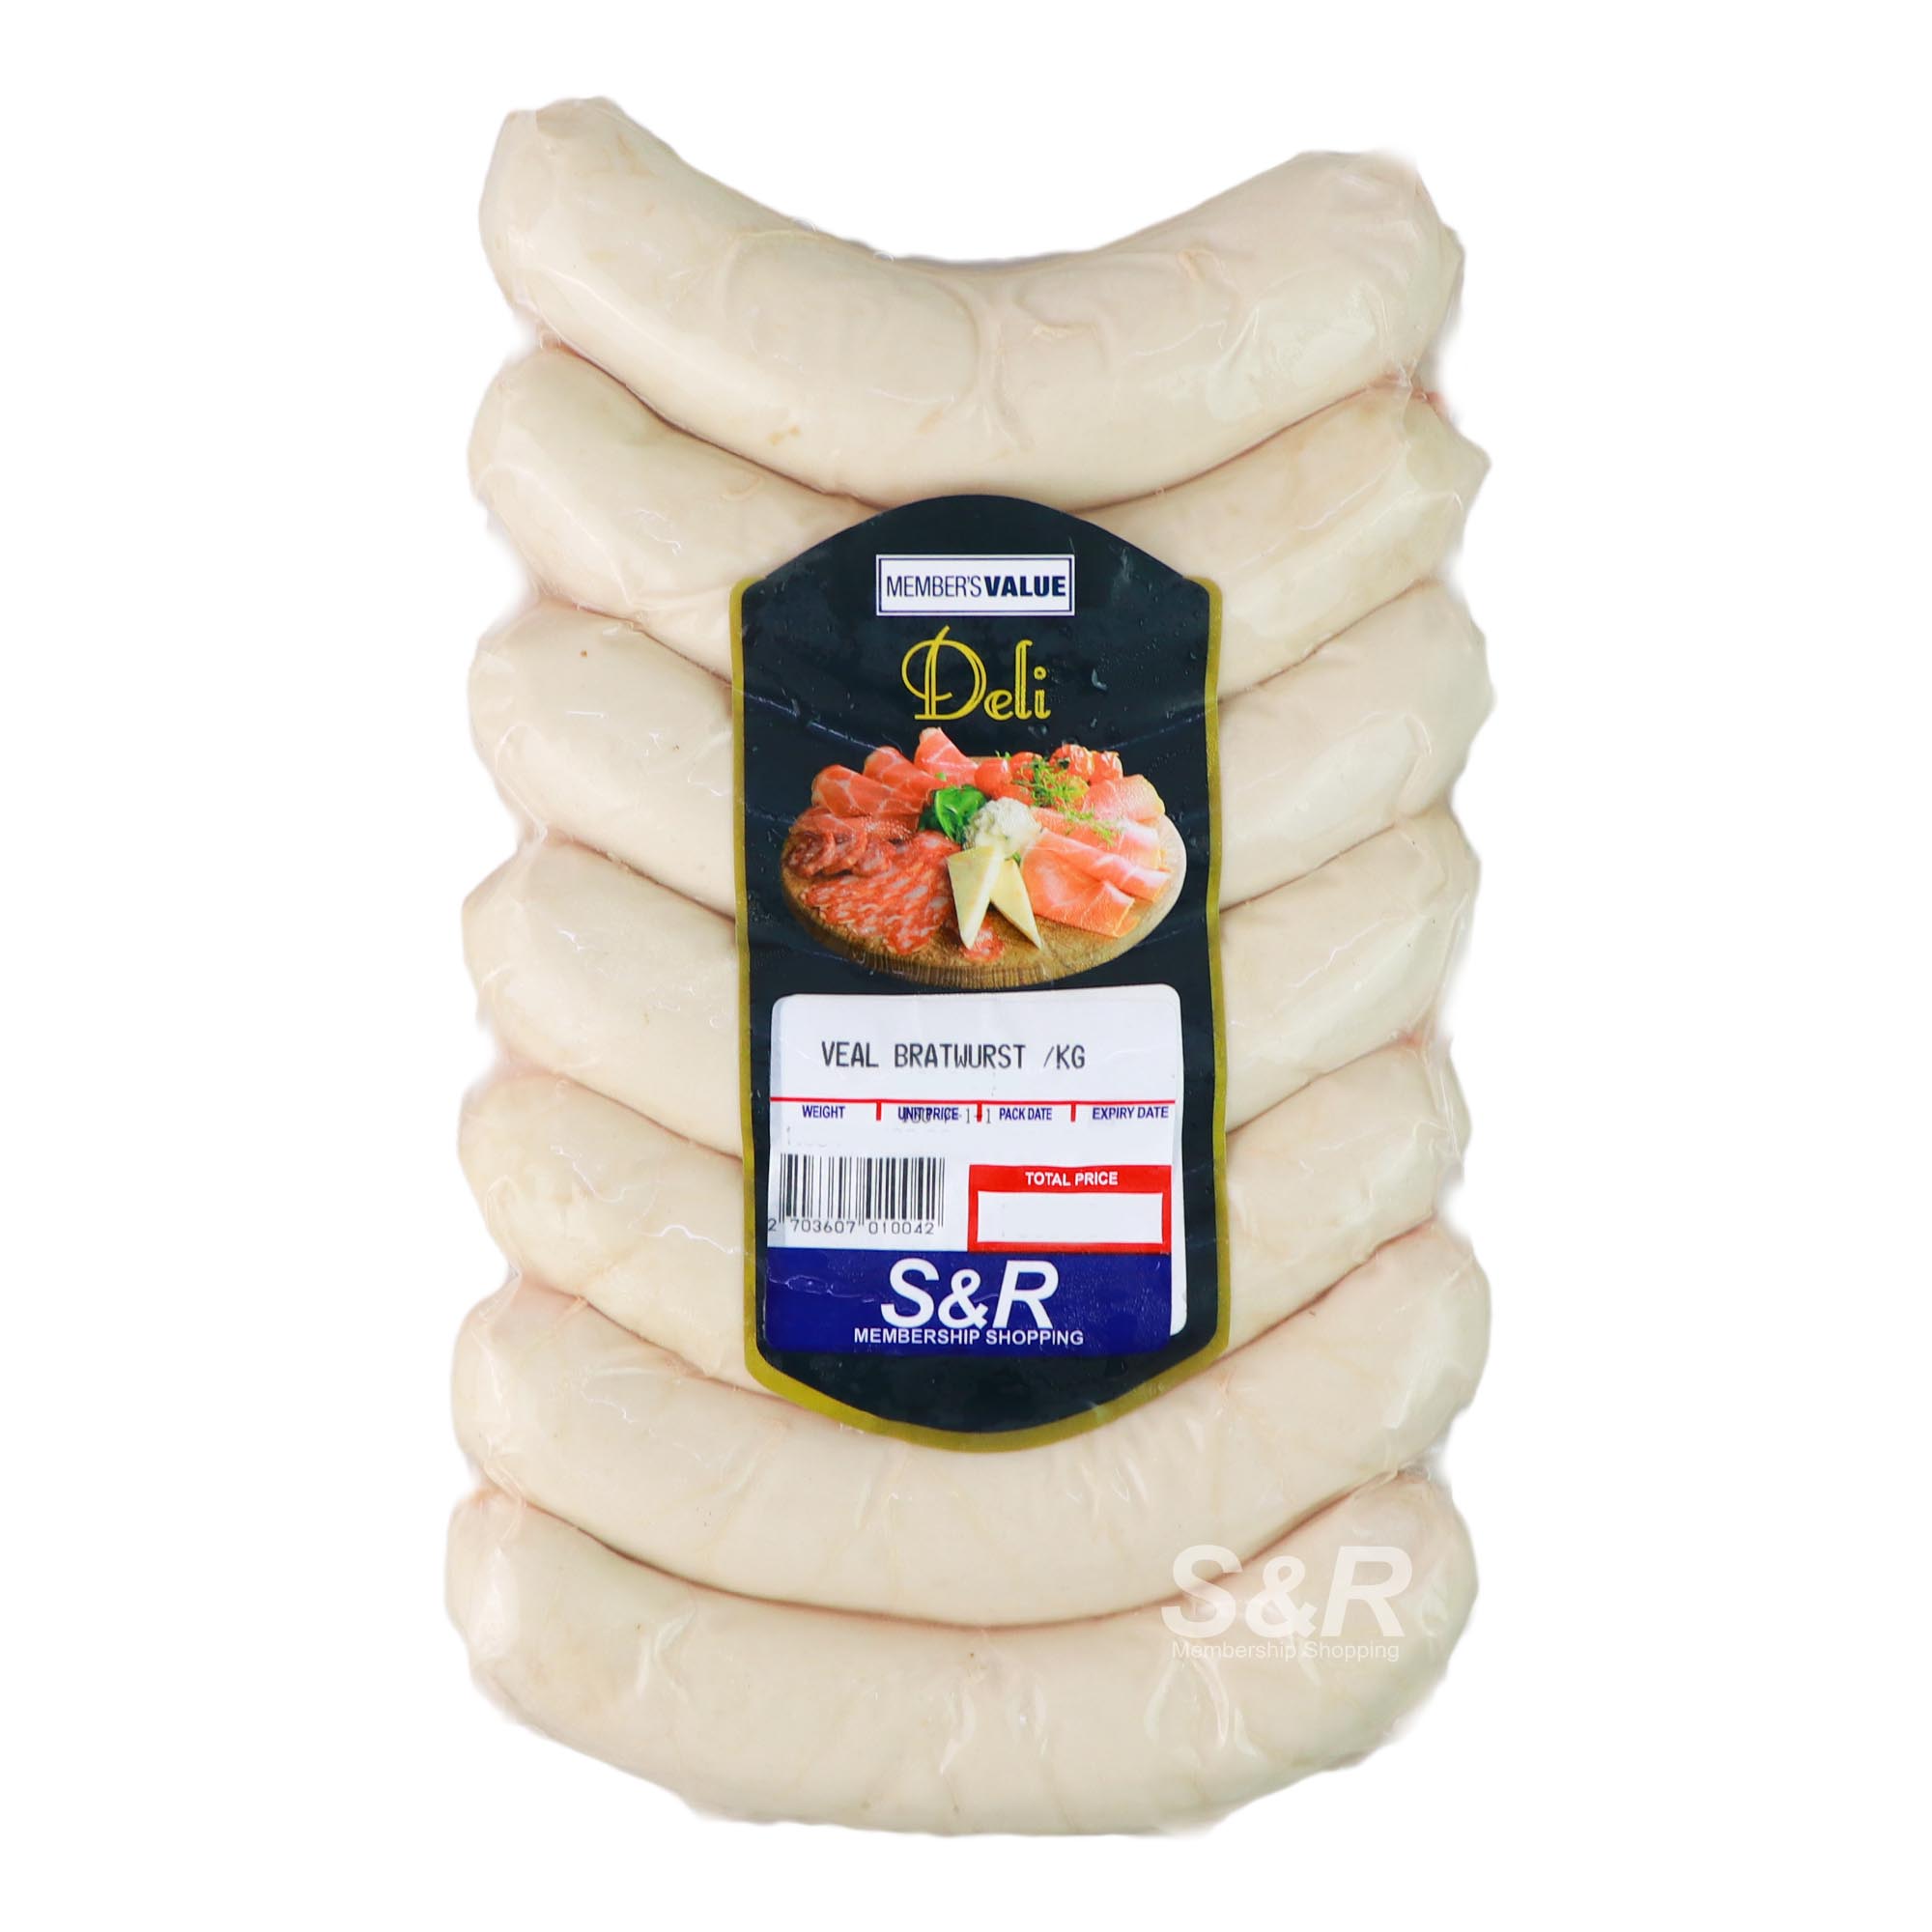 Member's Value Deli Veal Bratwurst approx. 1kg